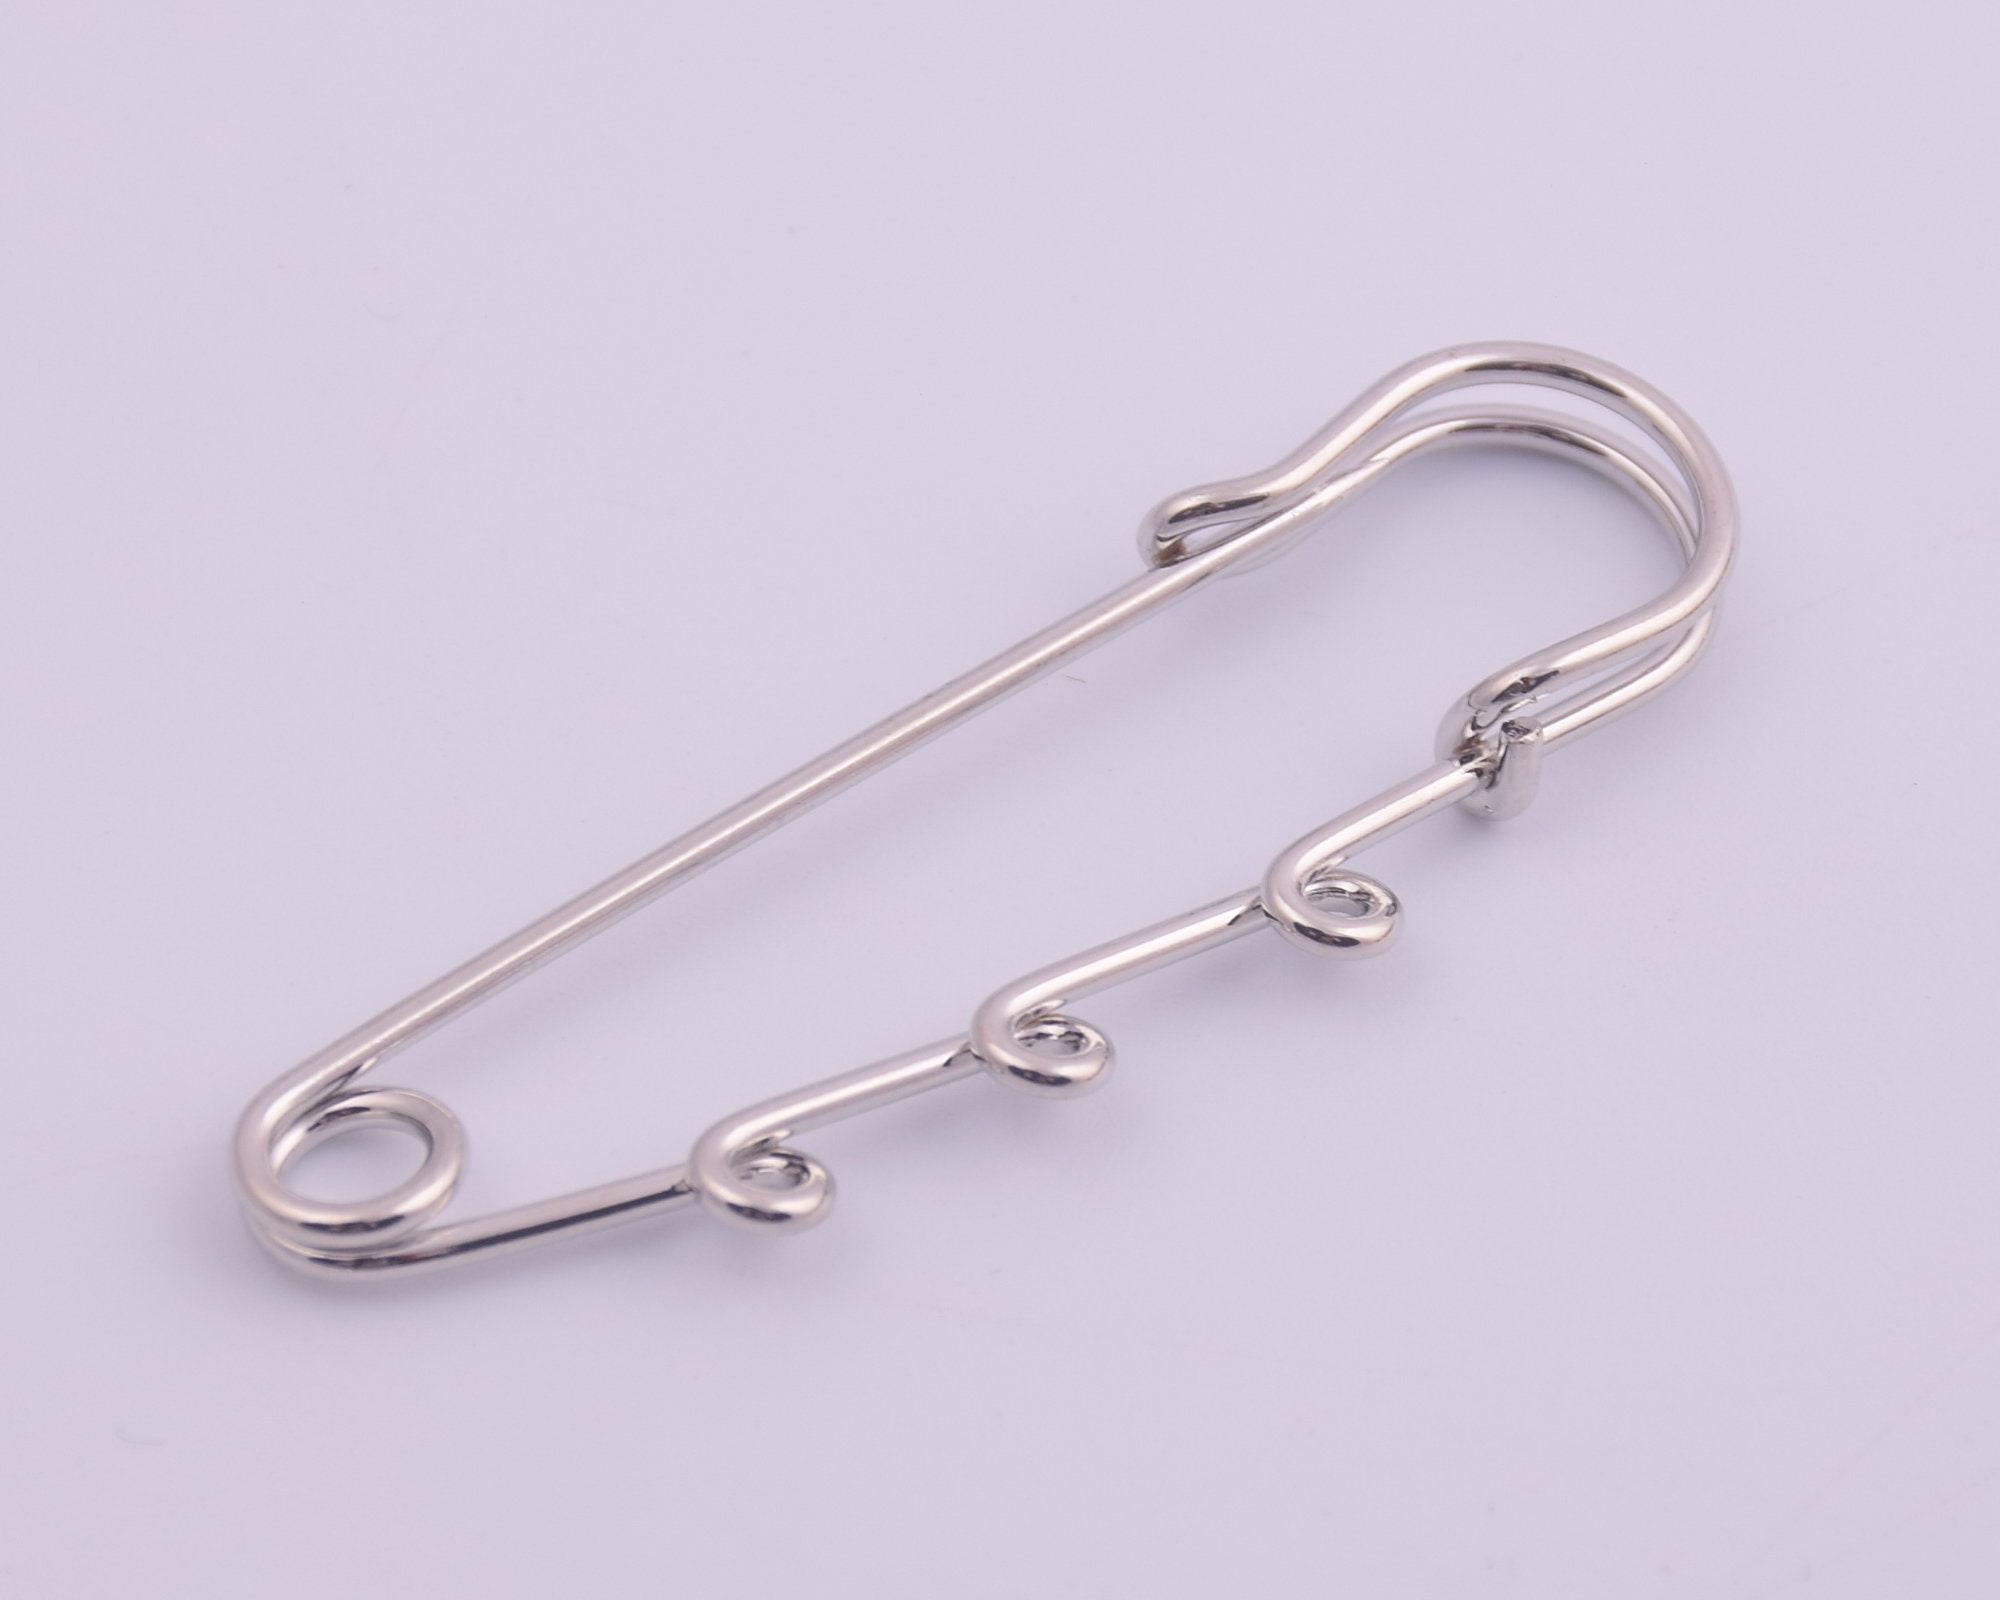 Safety pin 60mm plaid skirt pin triple loop iron pin brooch | Etsy